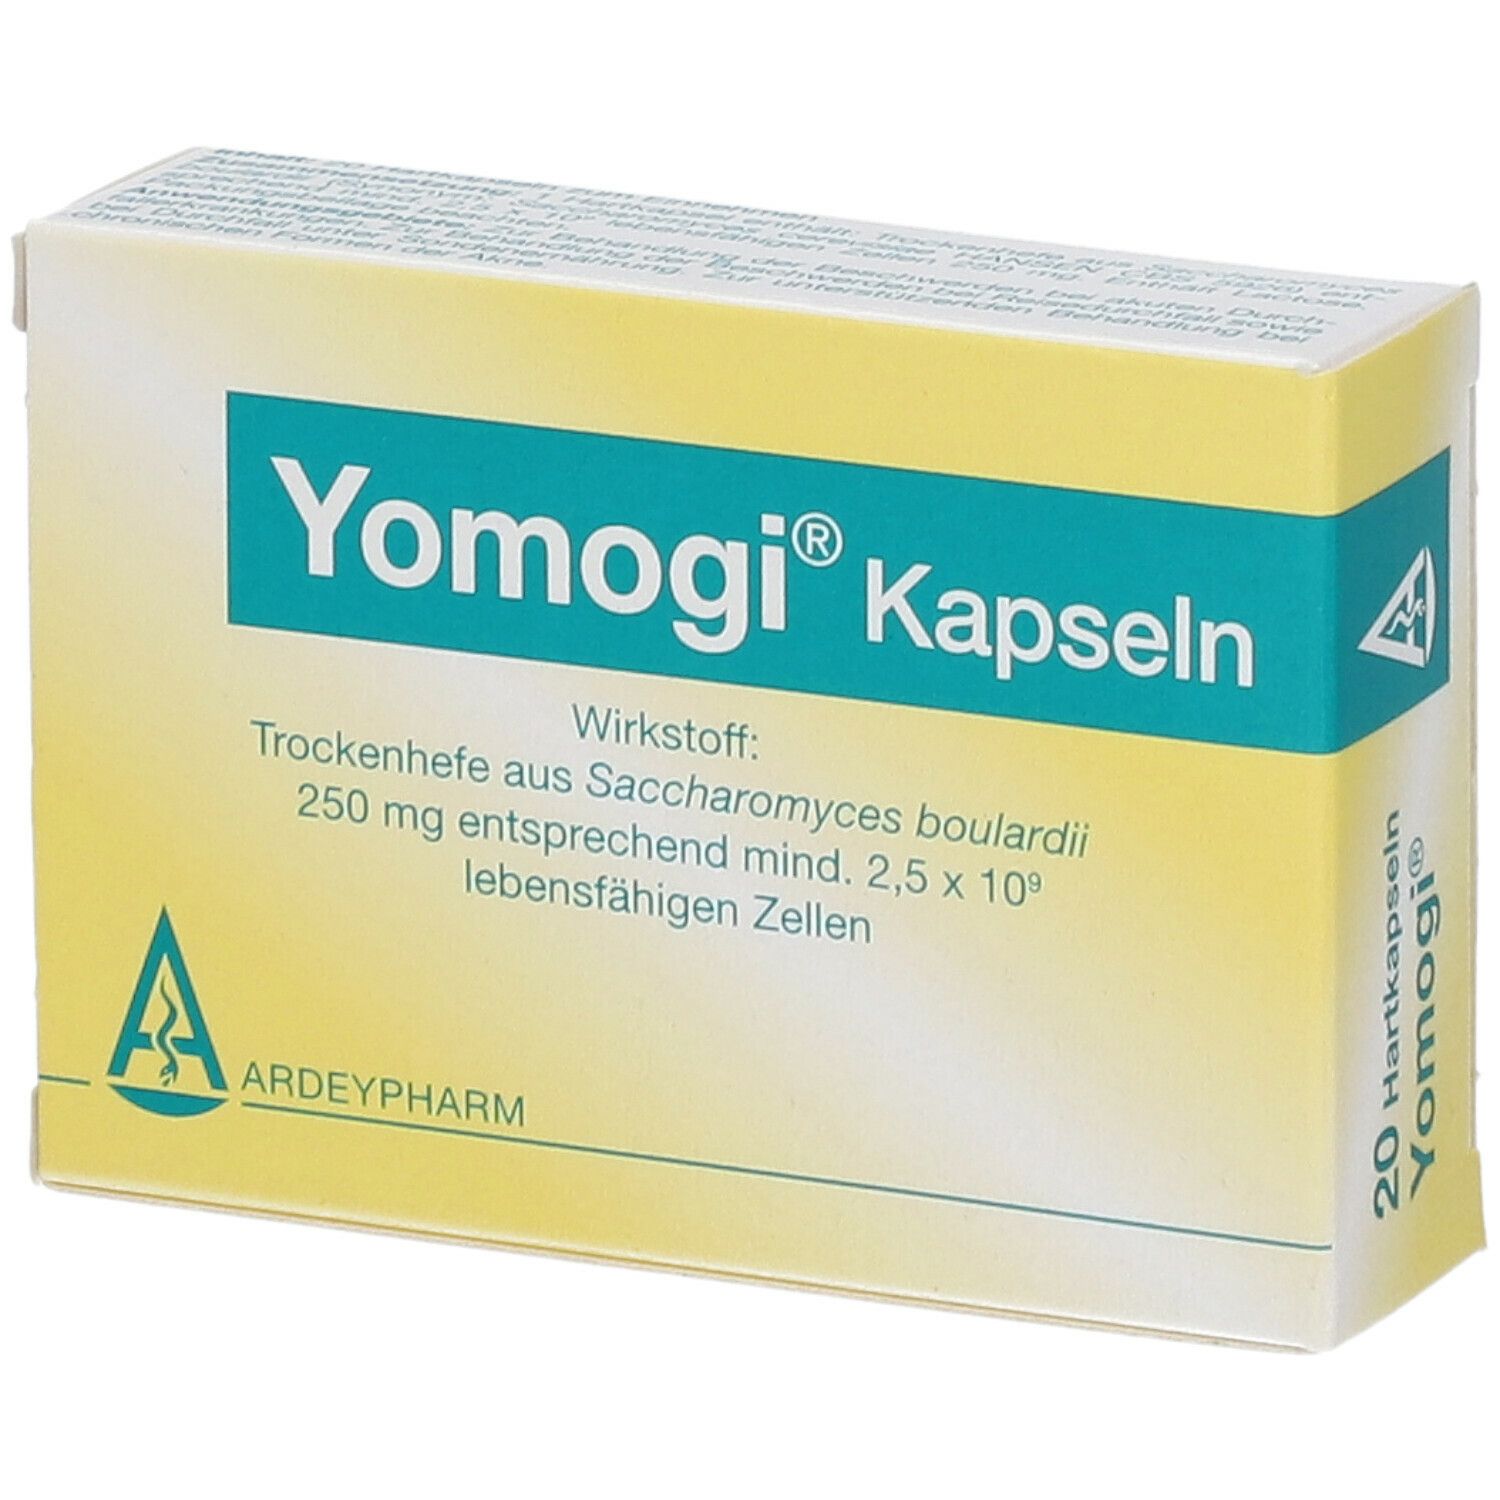 Yomogi® Kapseln